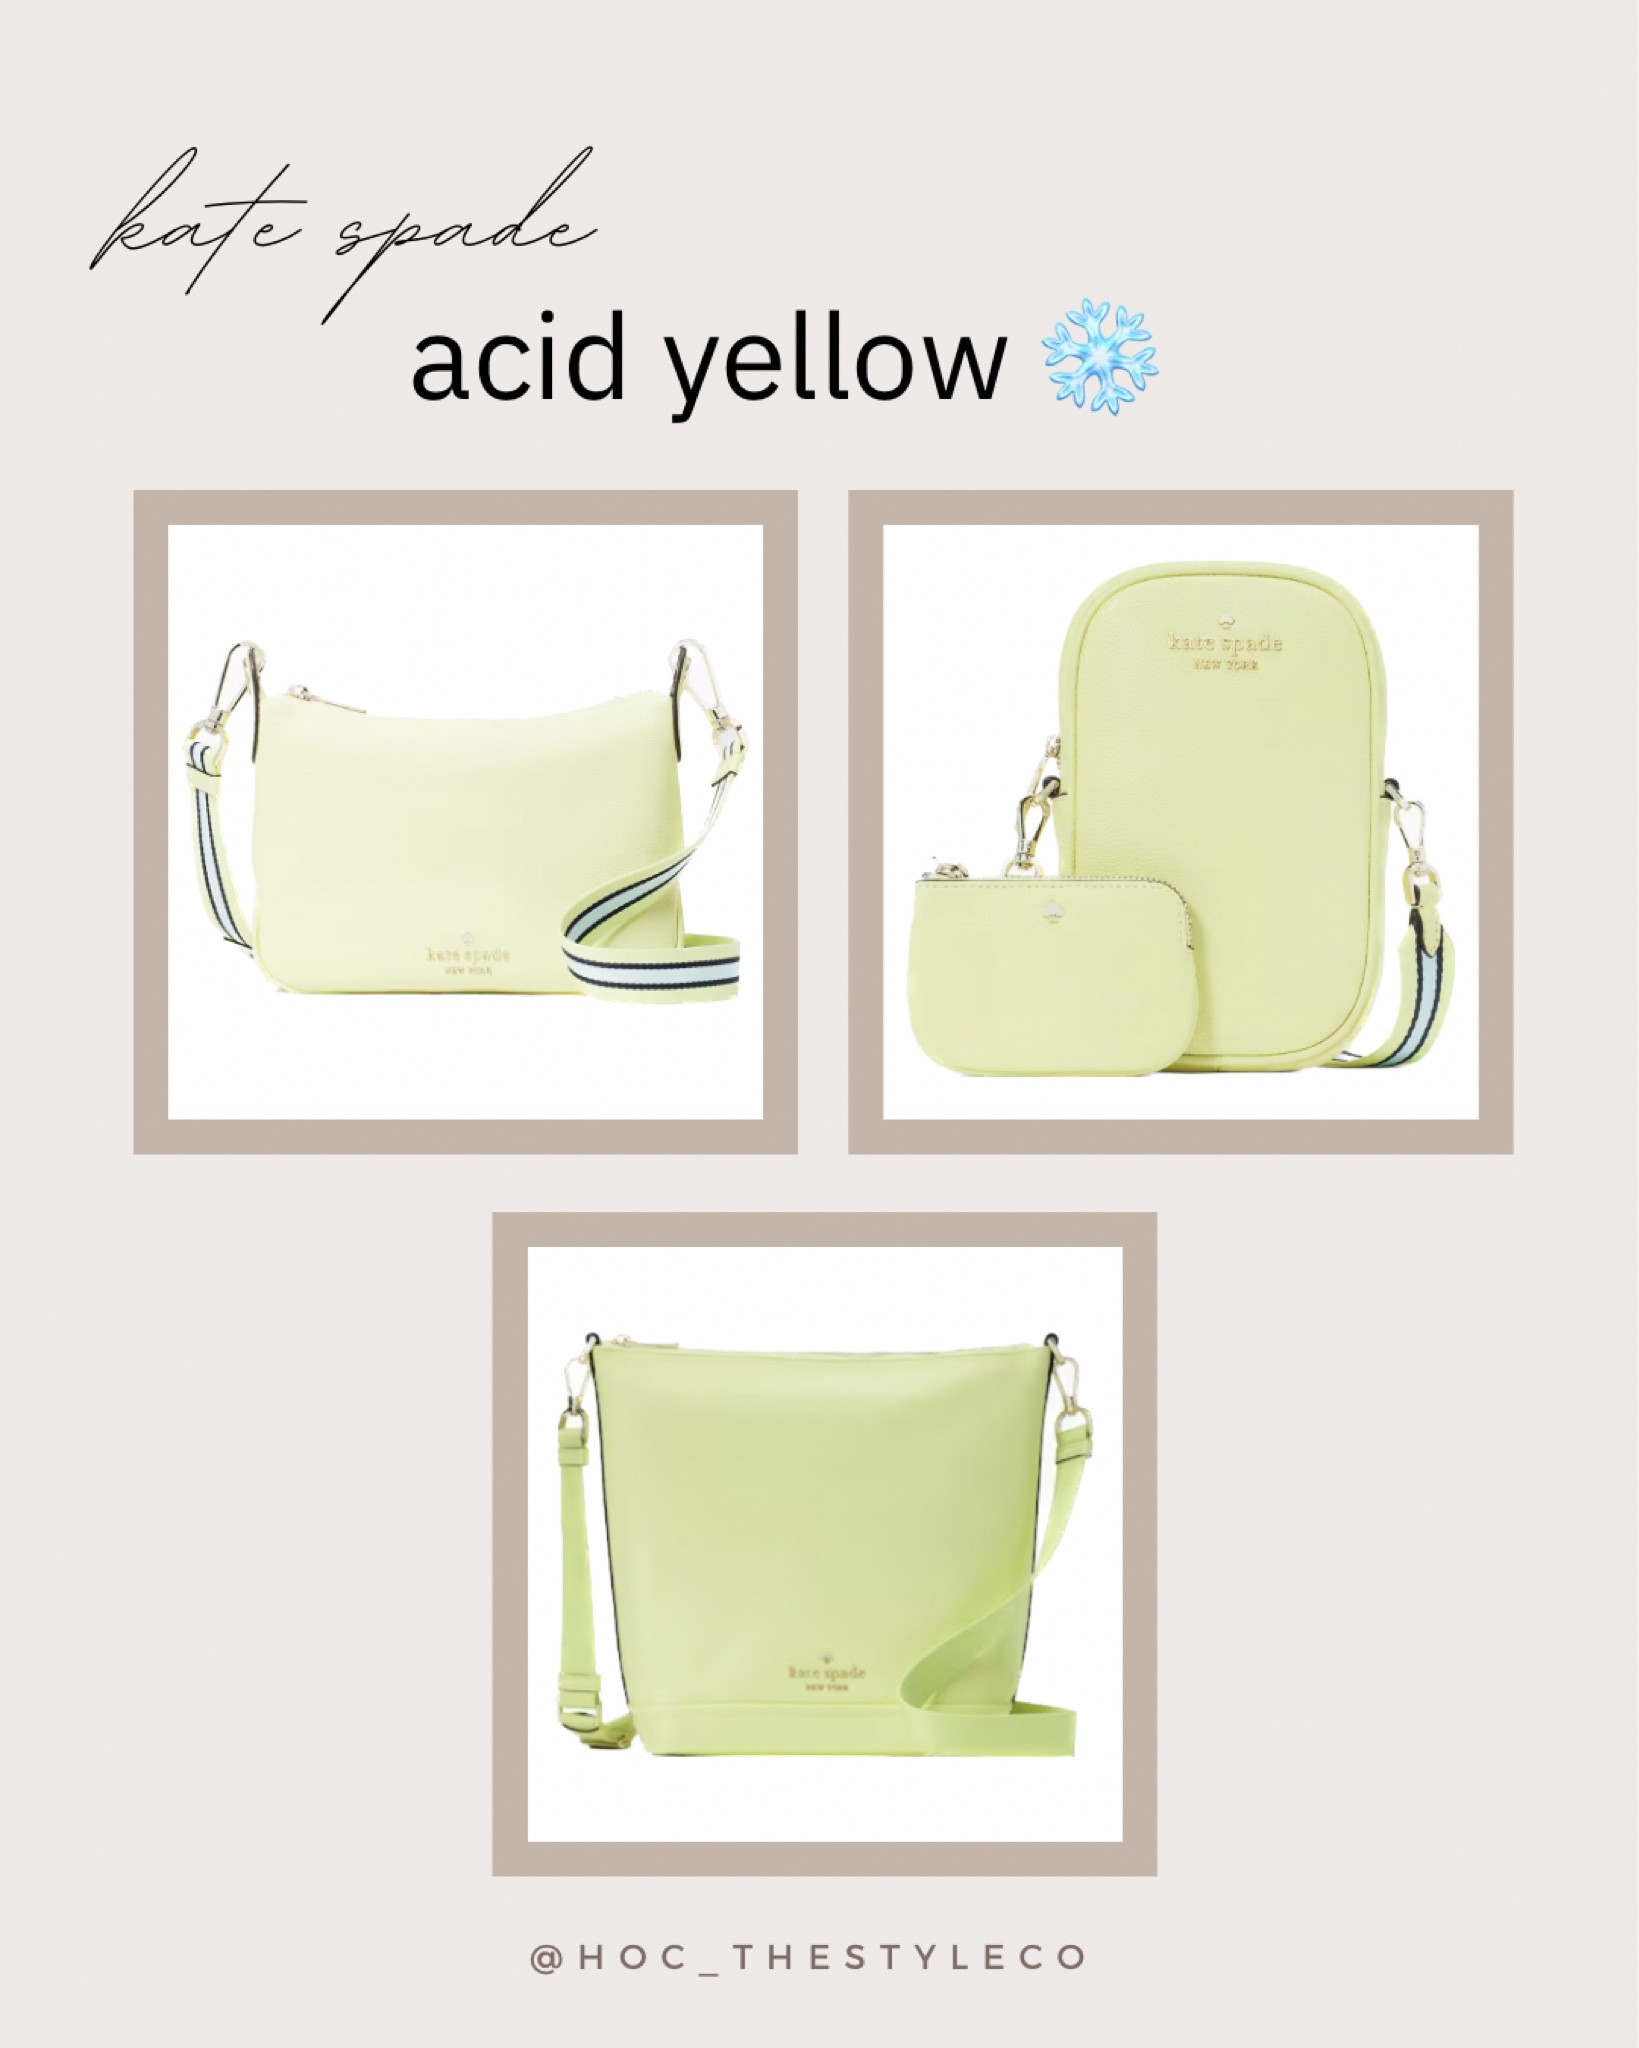 Kate Spade Bags | Kate Spade Chelsea Nylon Belt Bag | Color: Black/Gold | Size: Os | Newexperience27's Closet